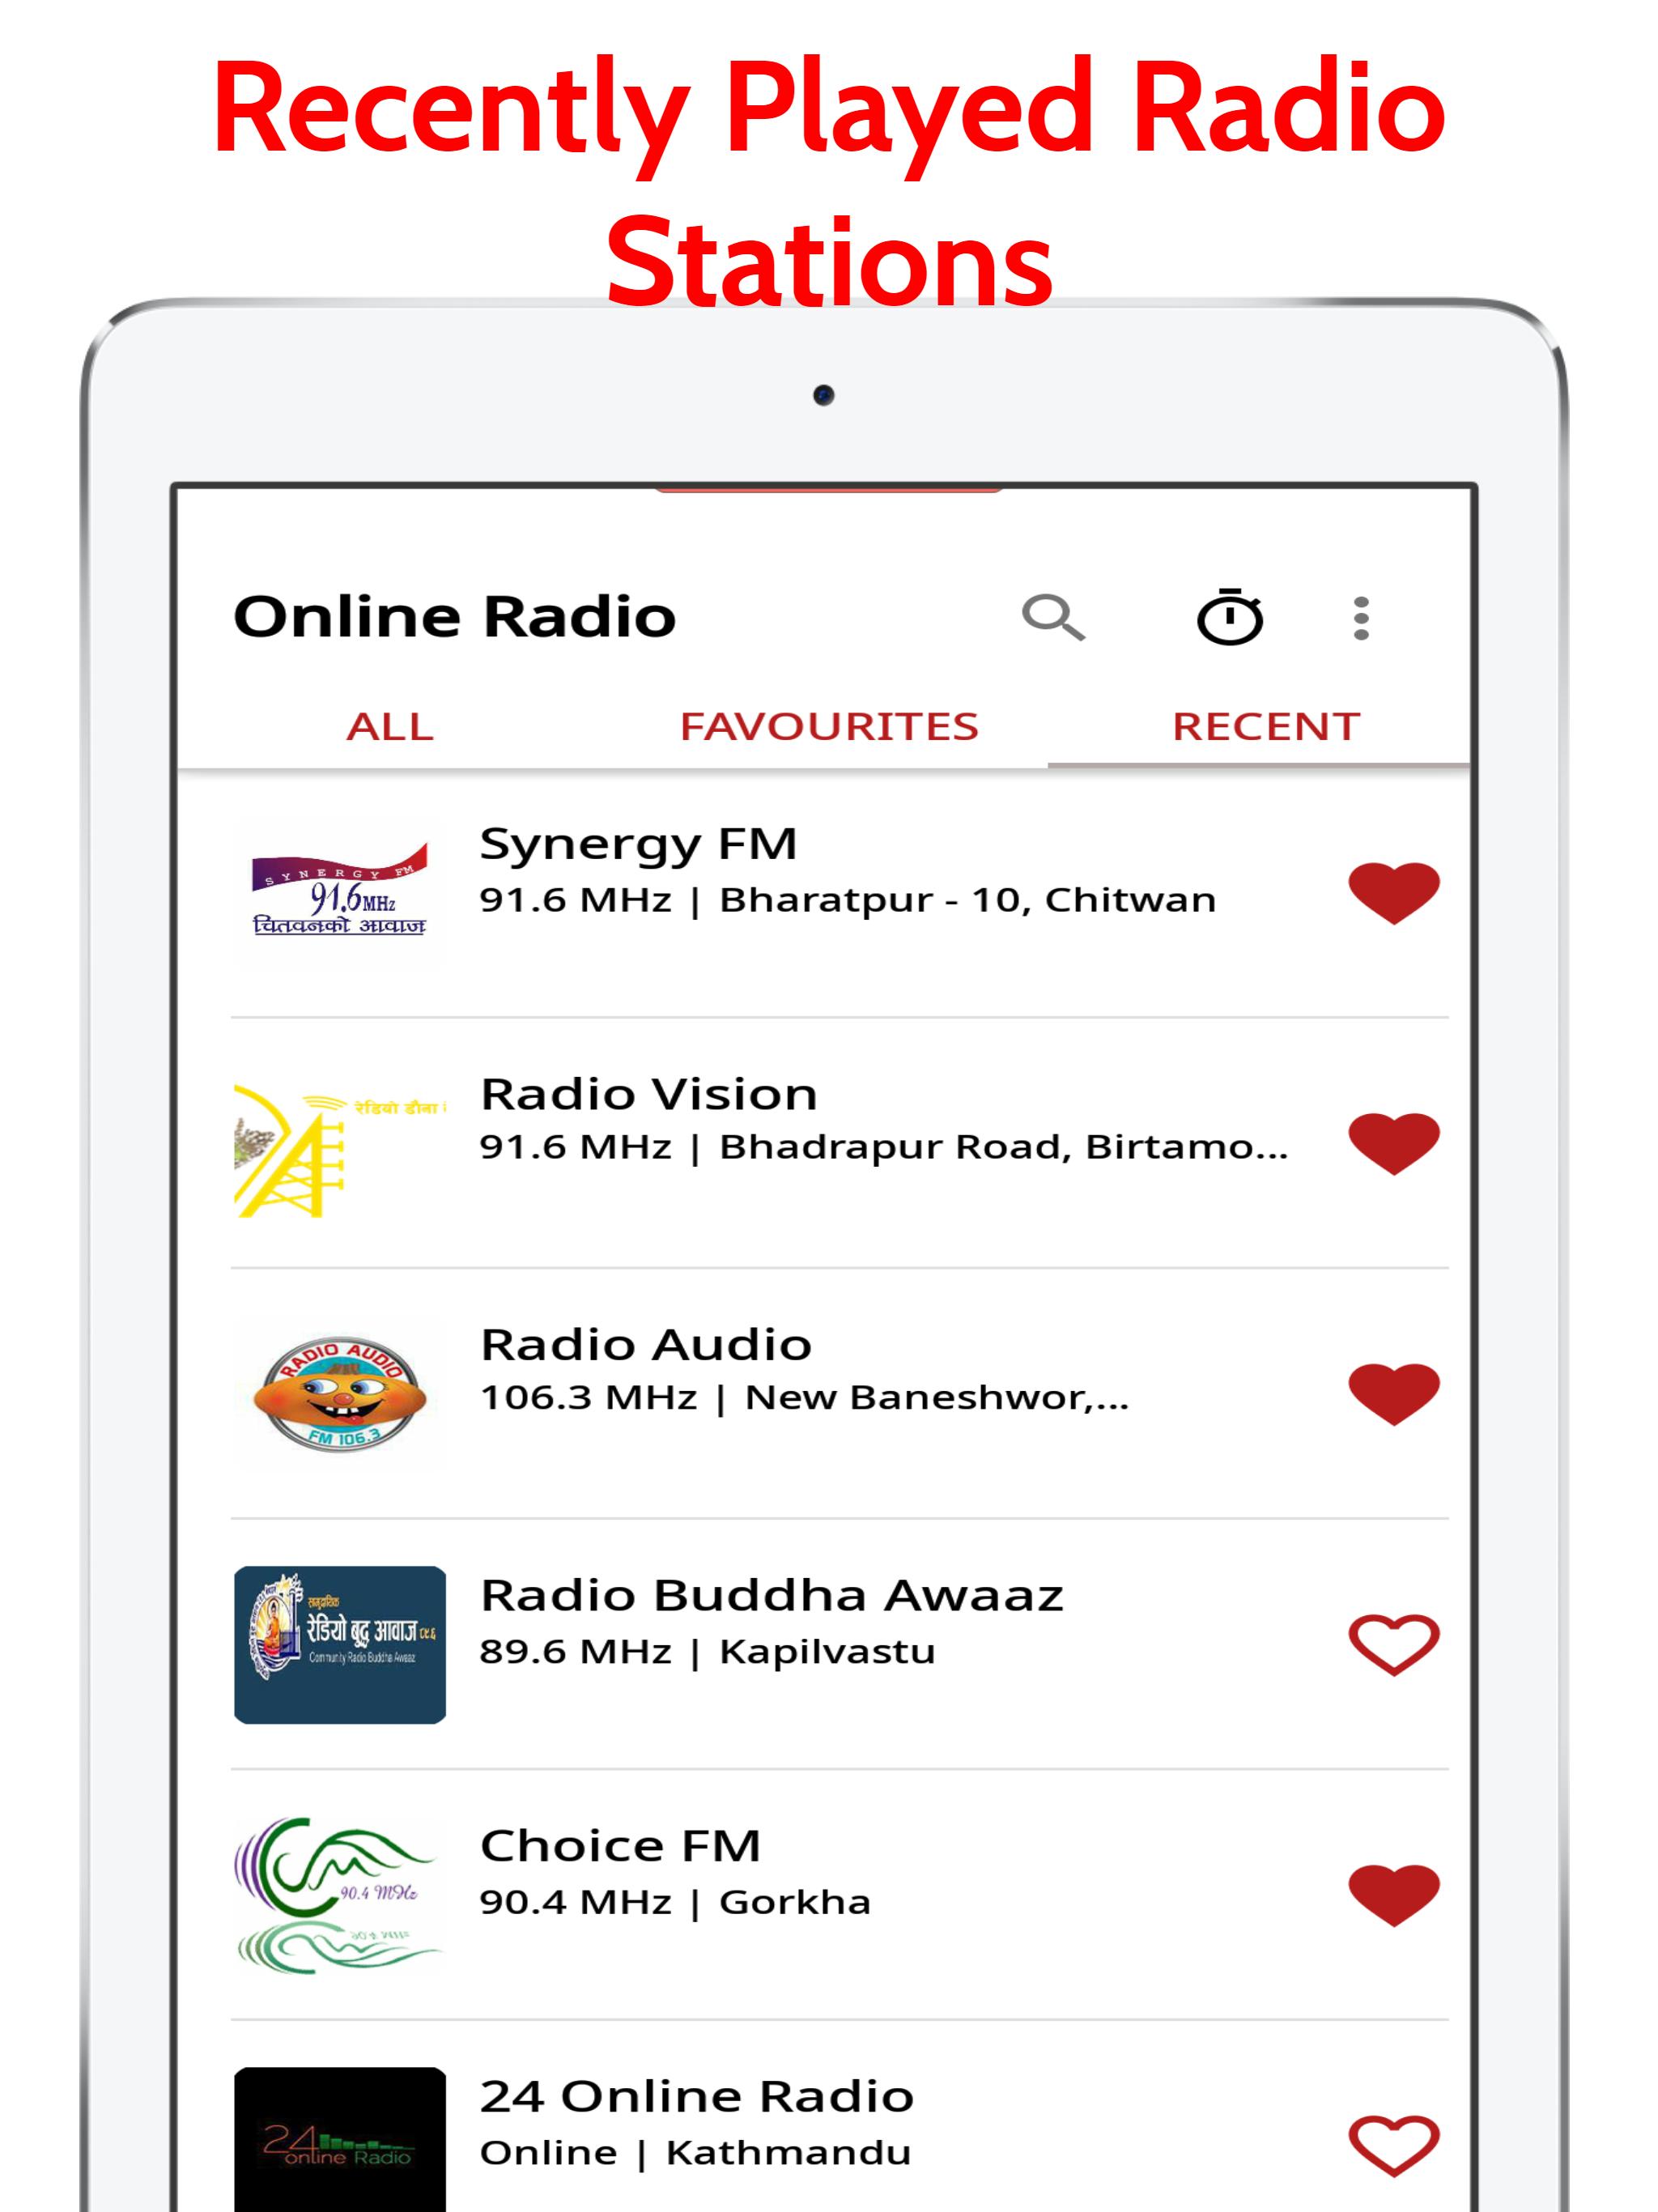 Latvia Radio Stations | Latvia Radio for Android - APK Download